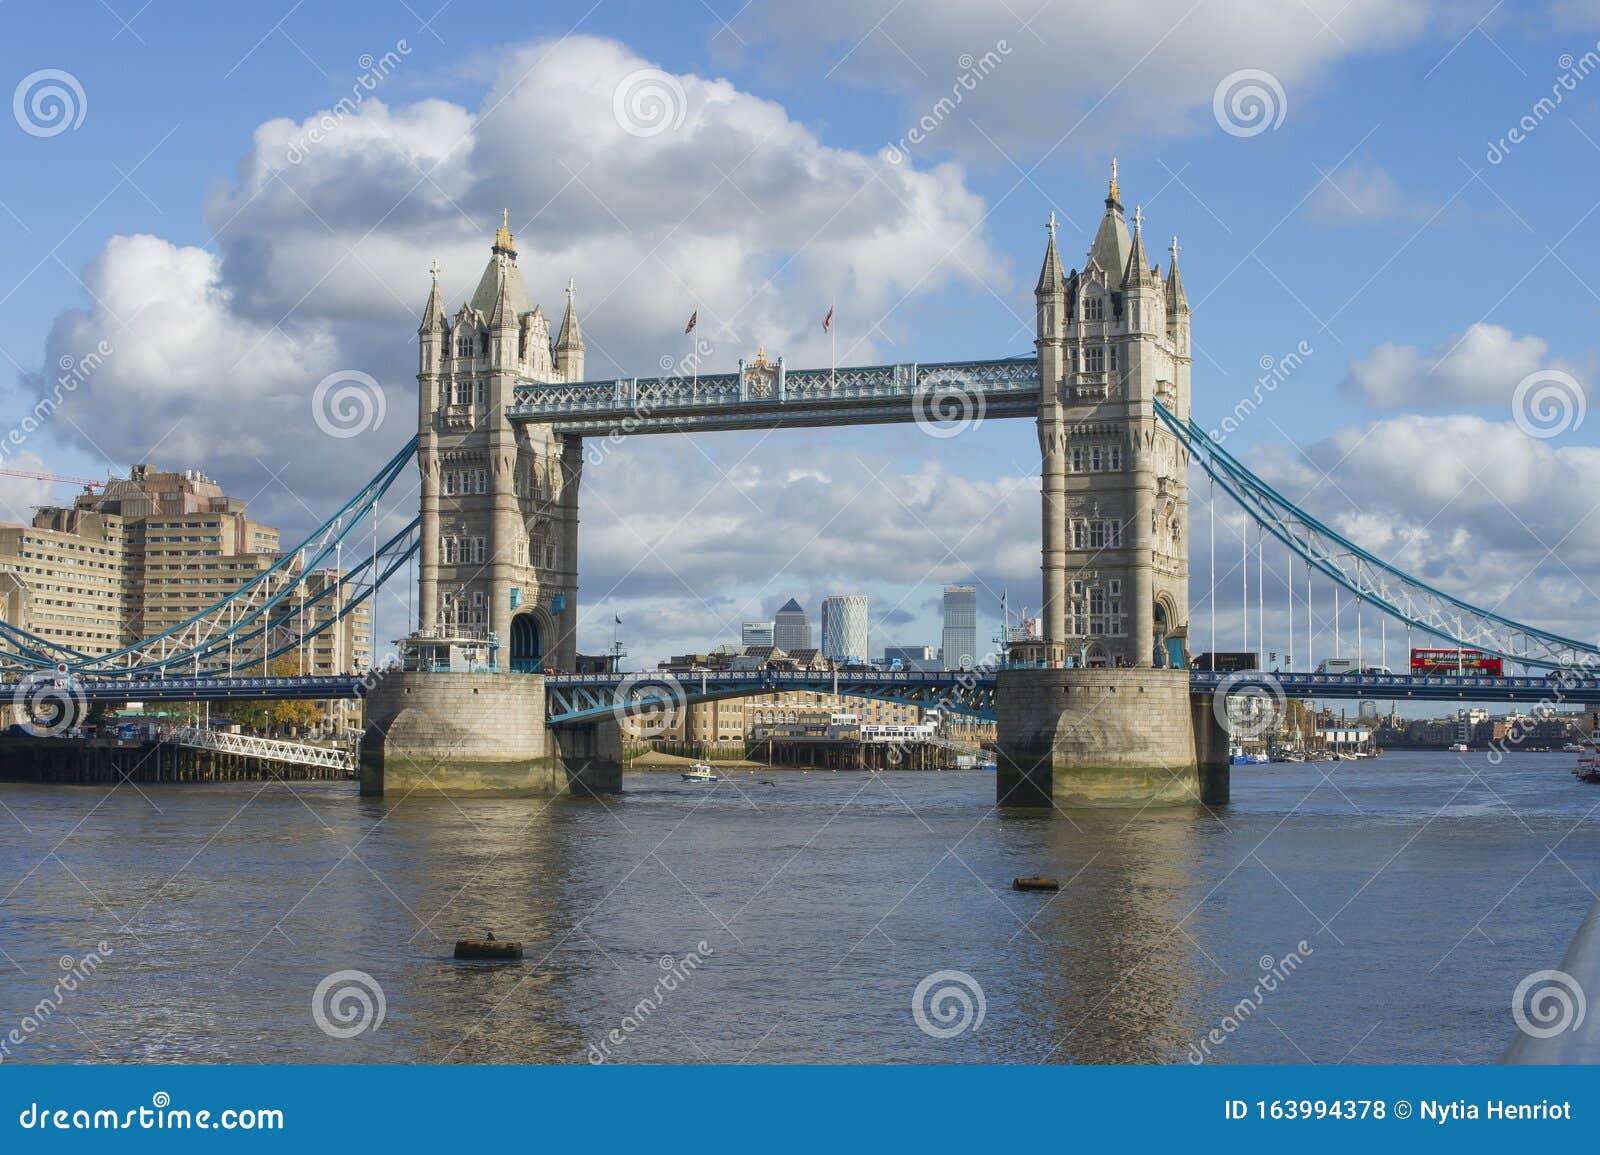 wonderfull view of tower bridge, sky cloudy, londres